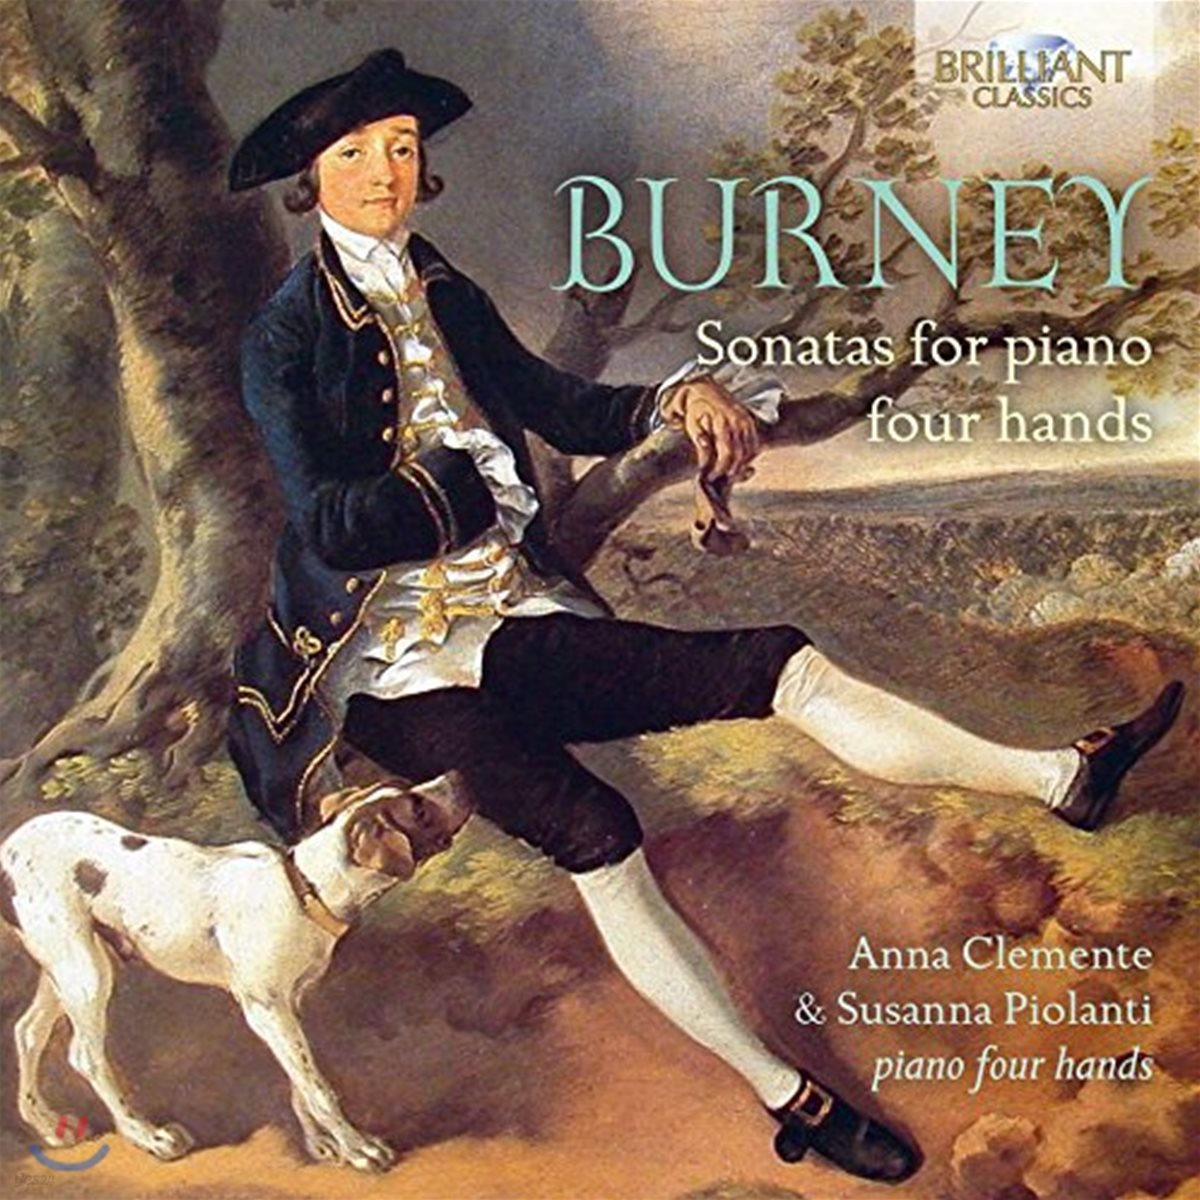 Anna Clemente / Susanna Piolanti 찰스 버니: 네 손을 위한 피아노 소나타 - 안나 클레멘테, 수잔나 피올란티  (Charles Burney: Sonatas for Piano Four Hands)